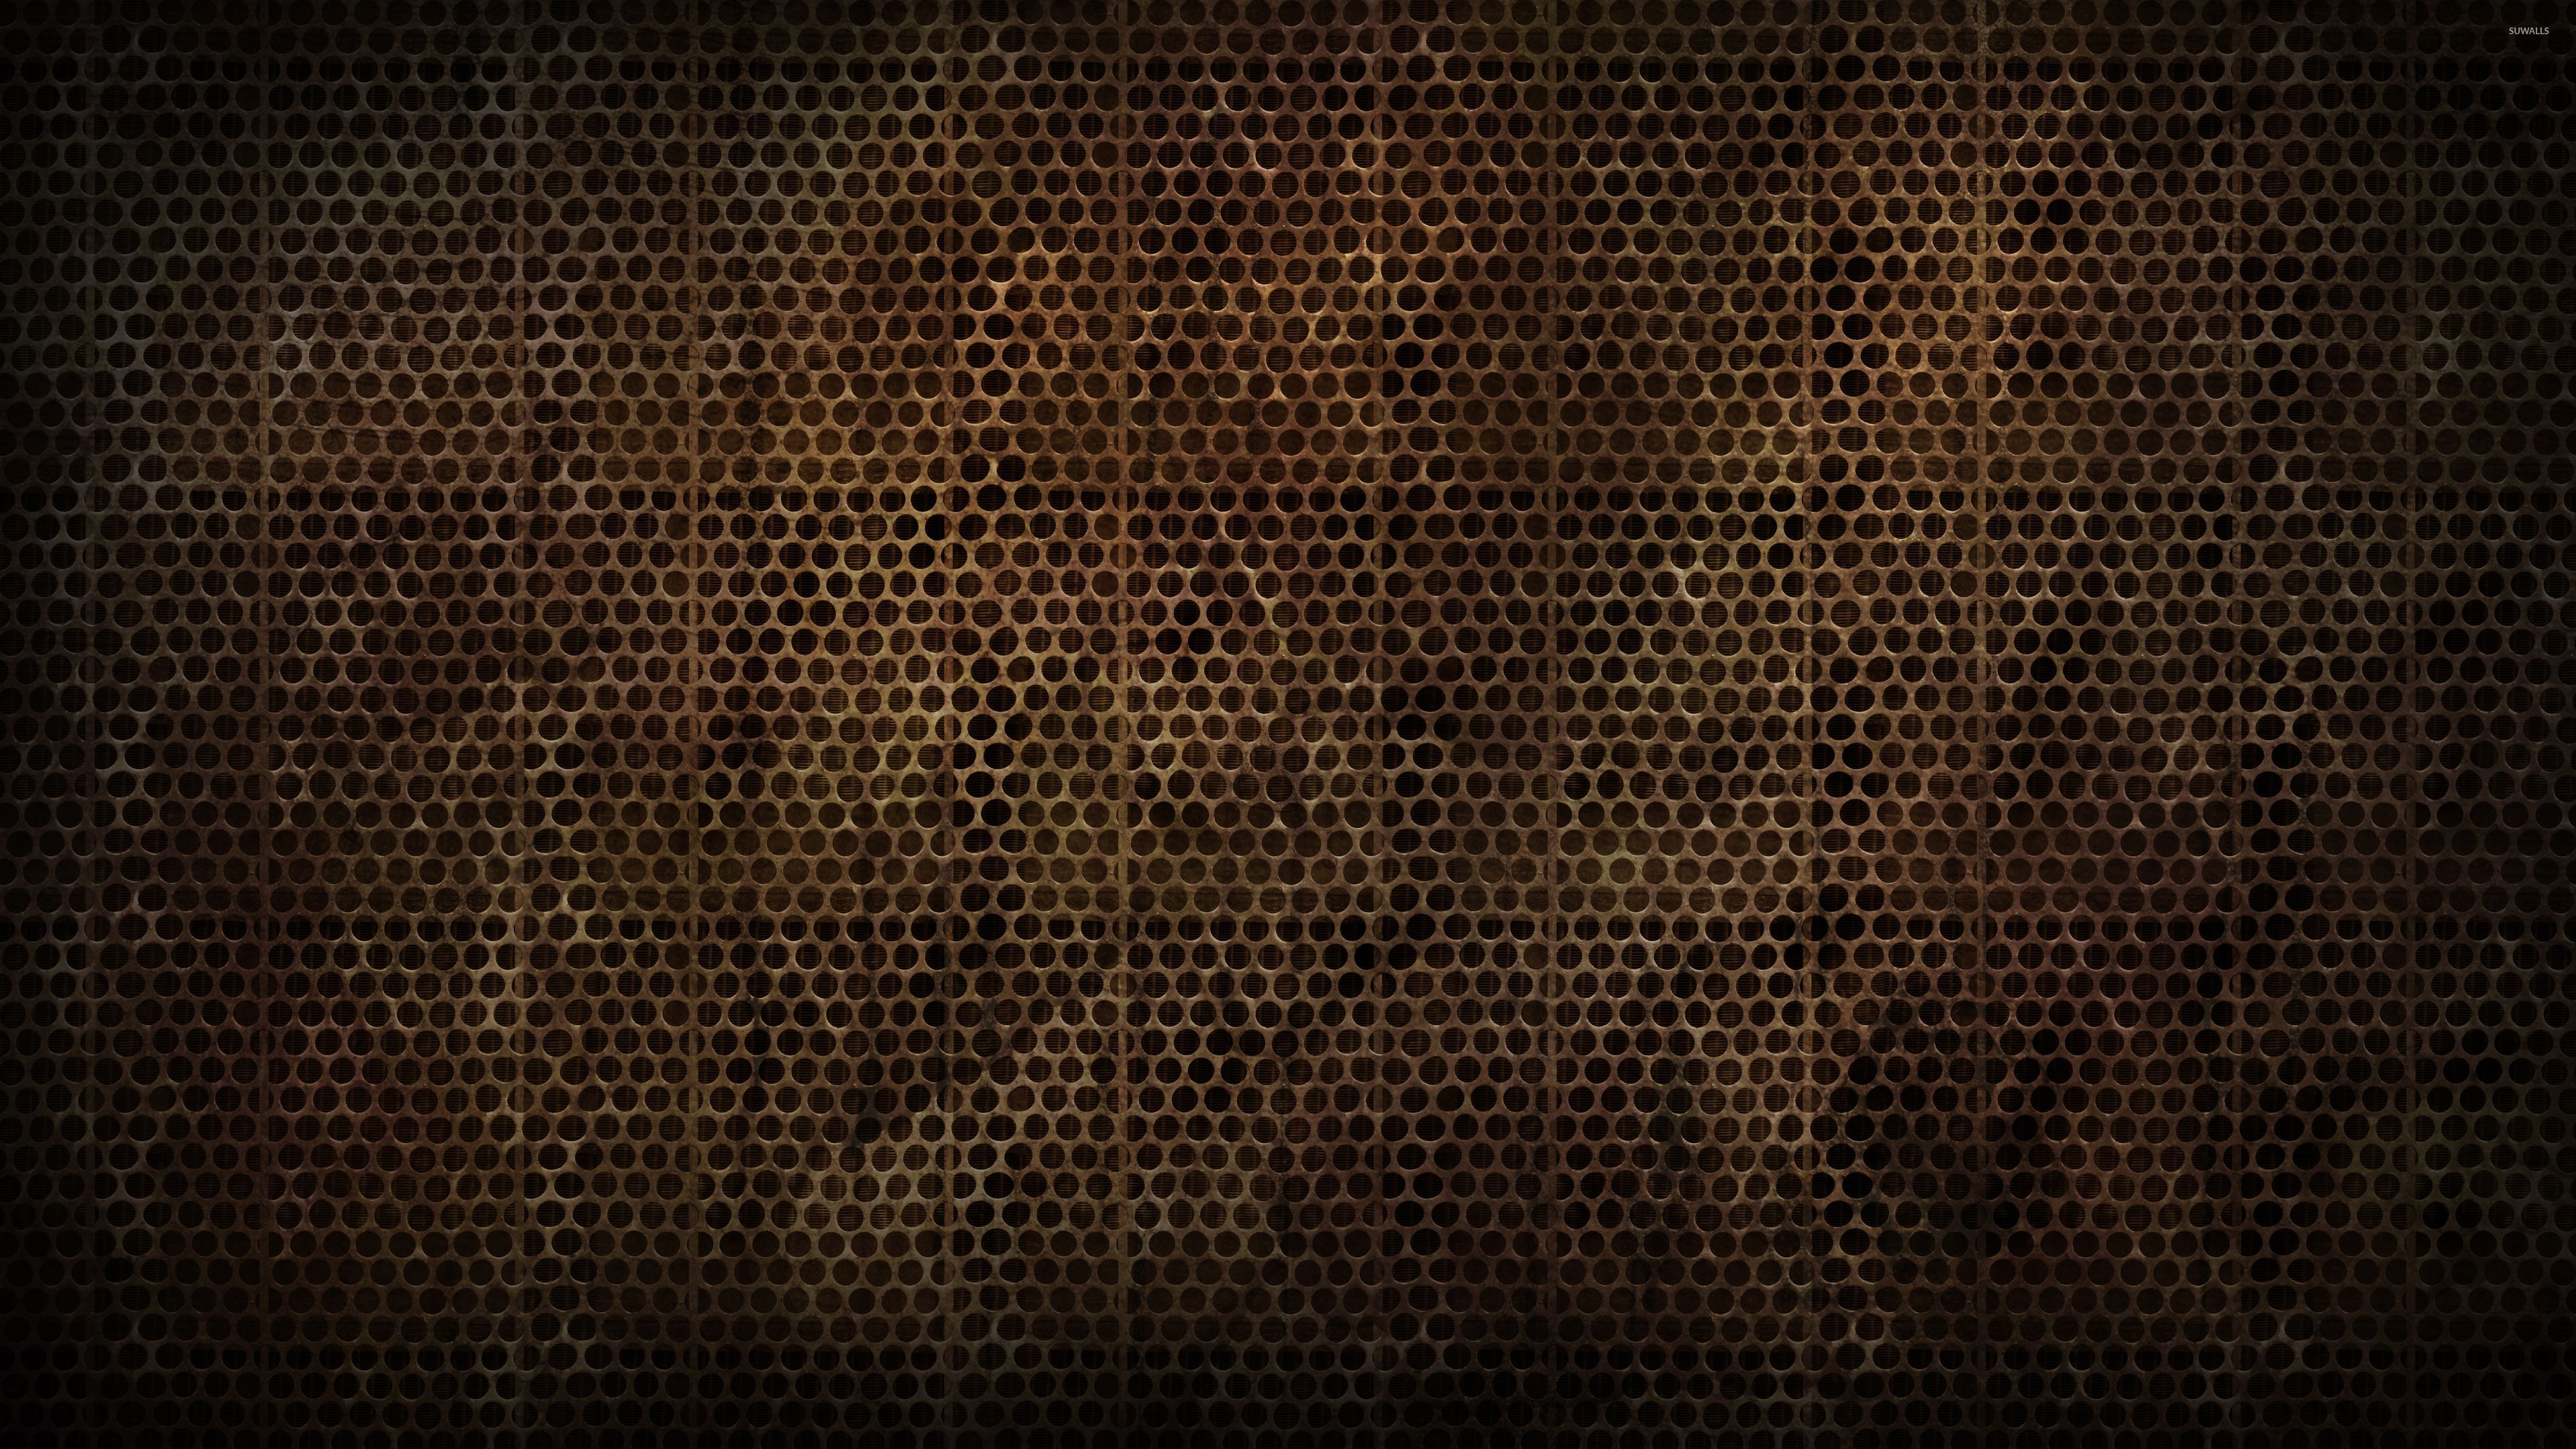 Brown metallic grid pattern wallpaper - Abstract wallpapers - #47436